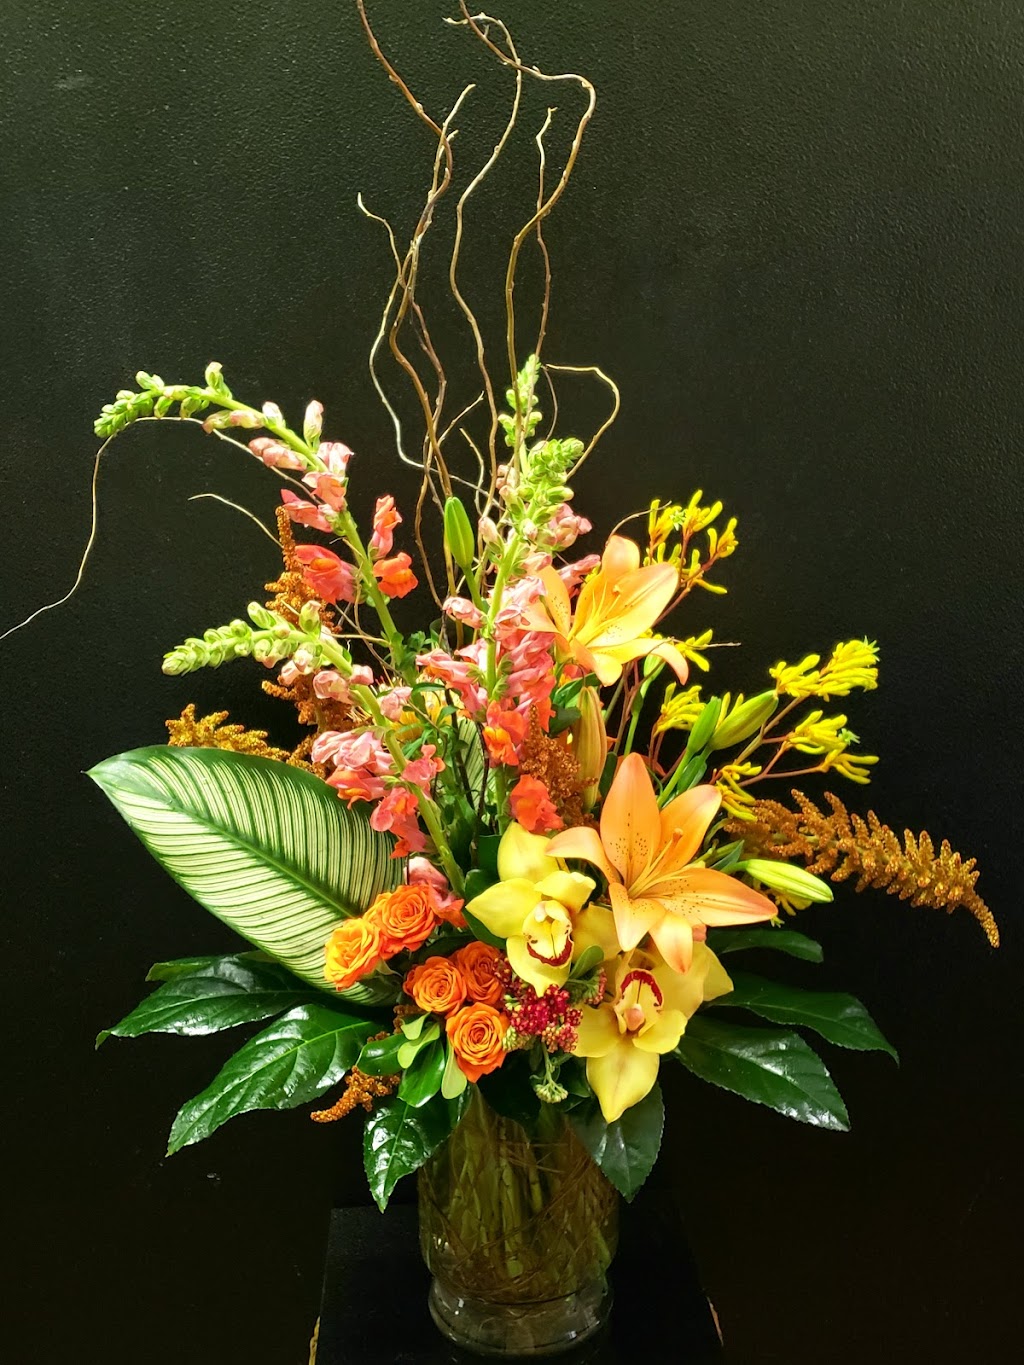 Cactus Flower Florist | 36889 N Tom Darlington Dr, Carefree, AZ 85377 | Phone: (480) 575-0574